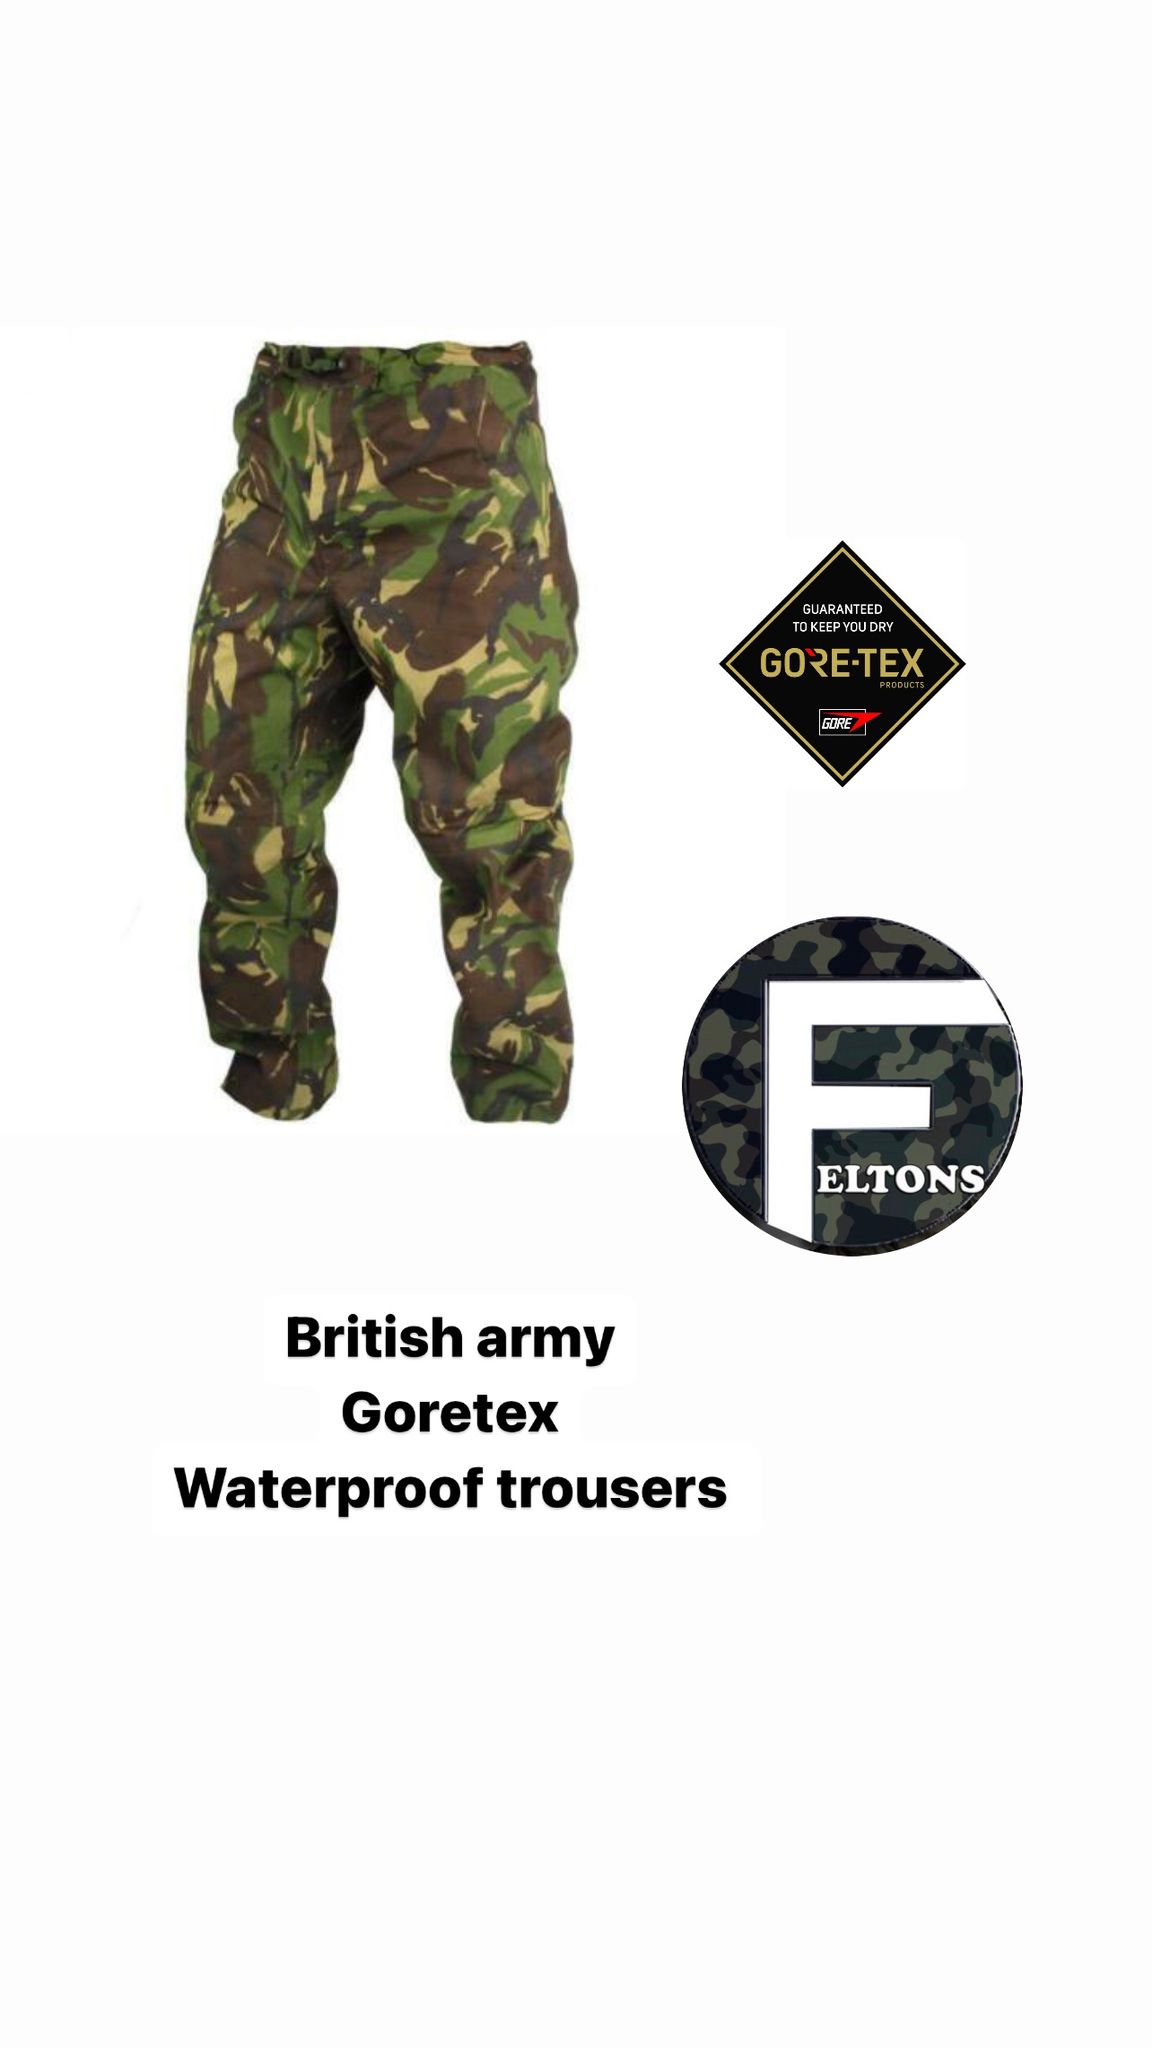 British army gore-tex trousers are genuine UK military surplus